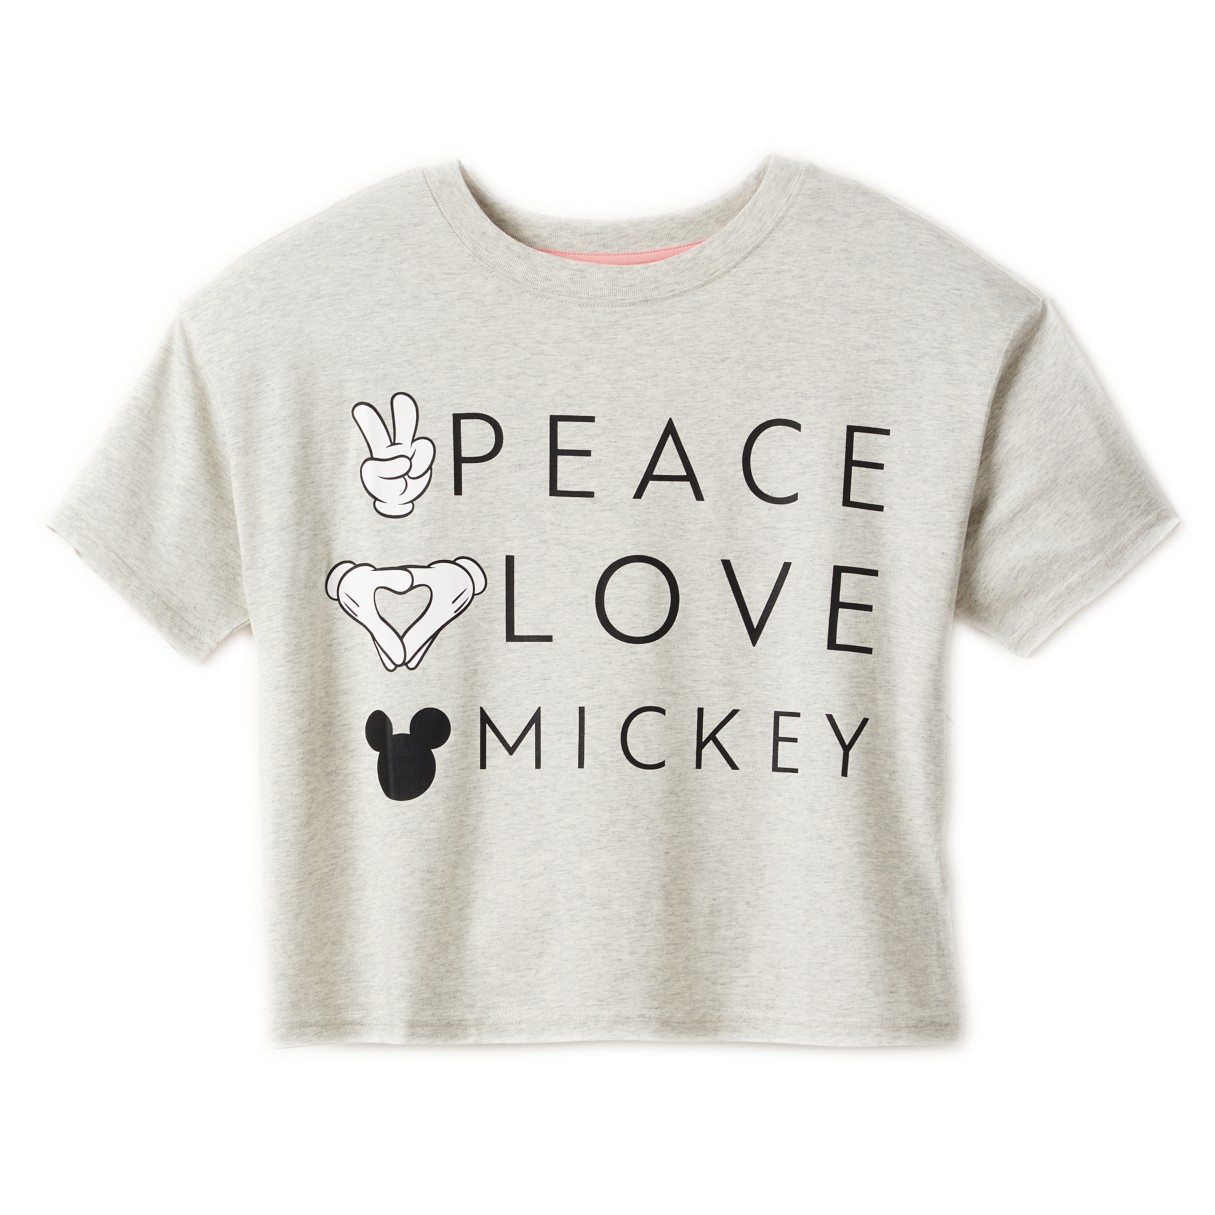 Mickey Mouse Sleep Shirt for Women